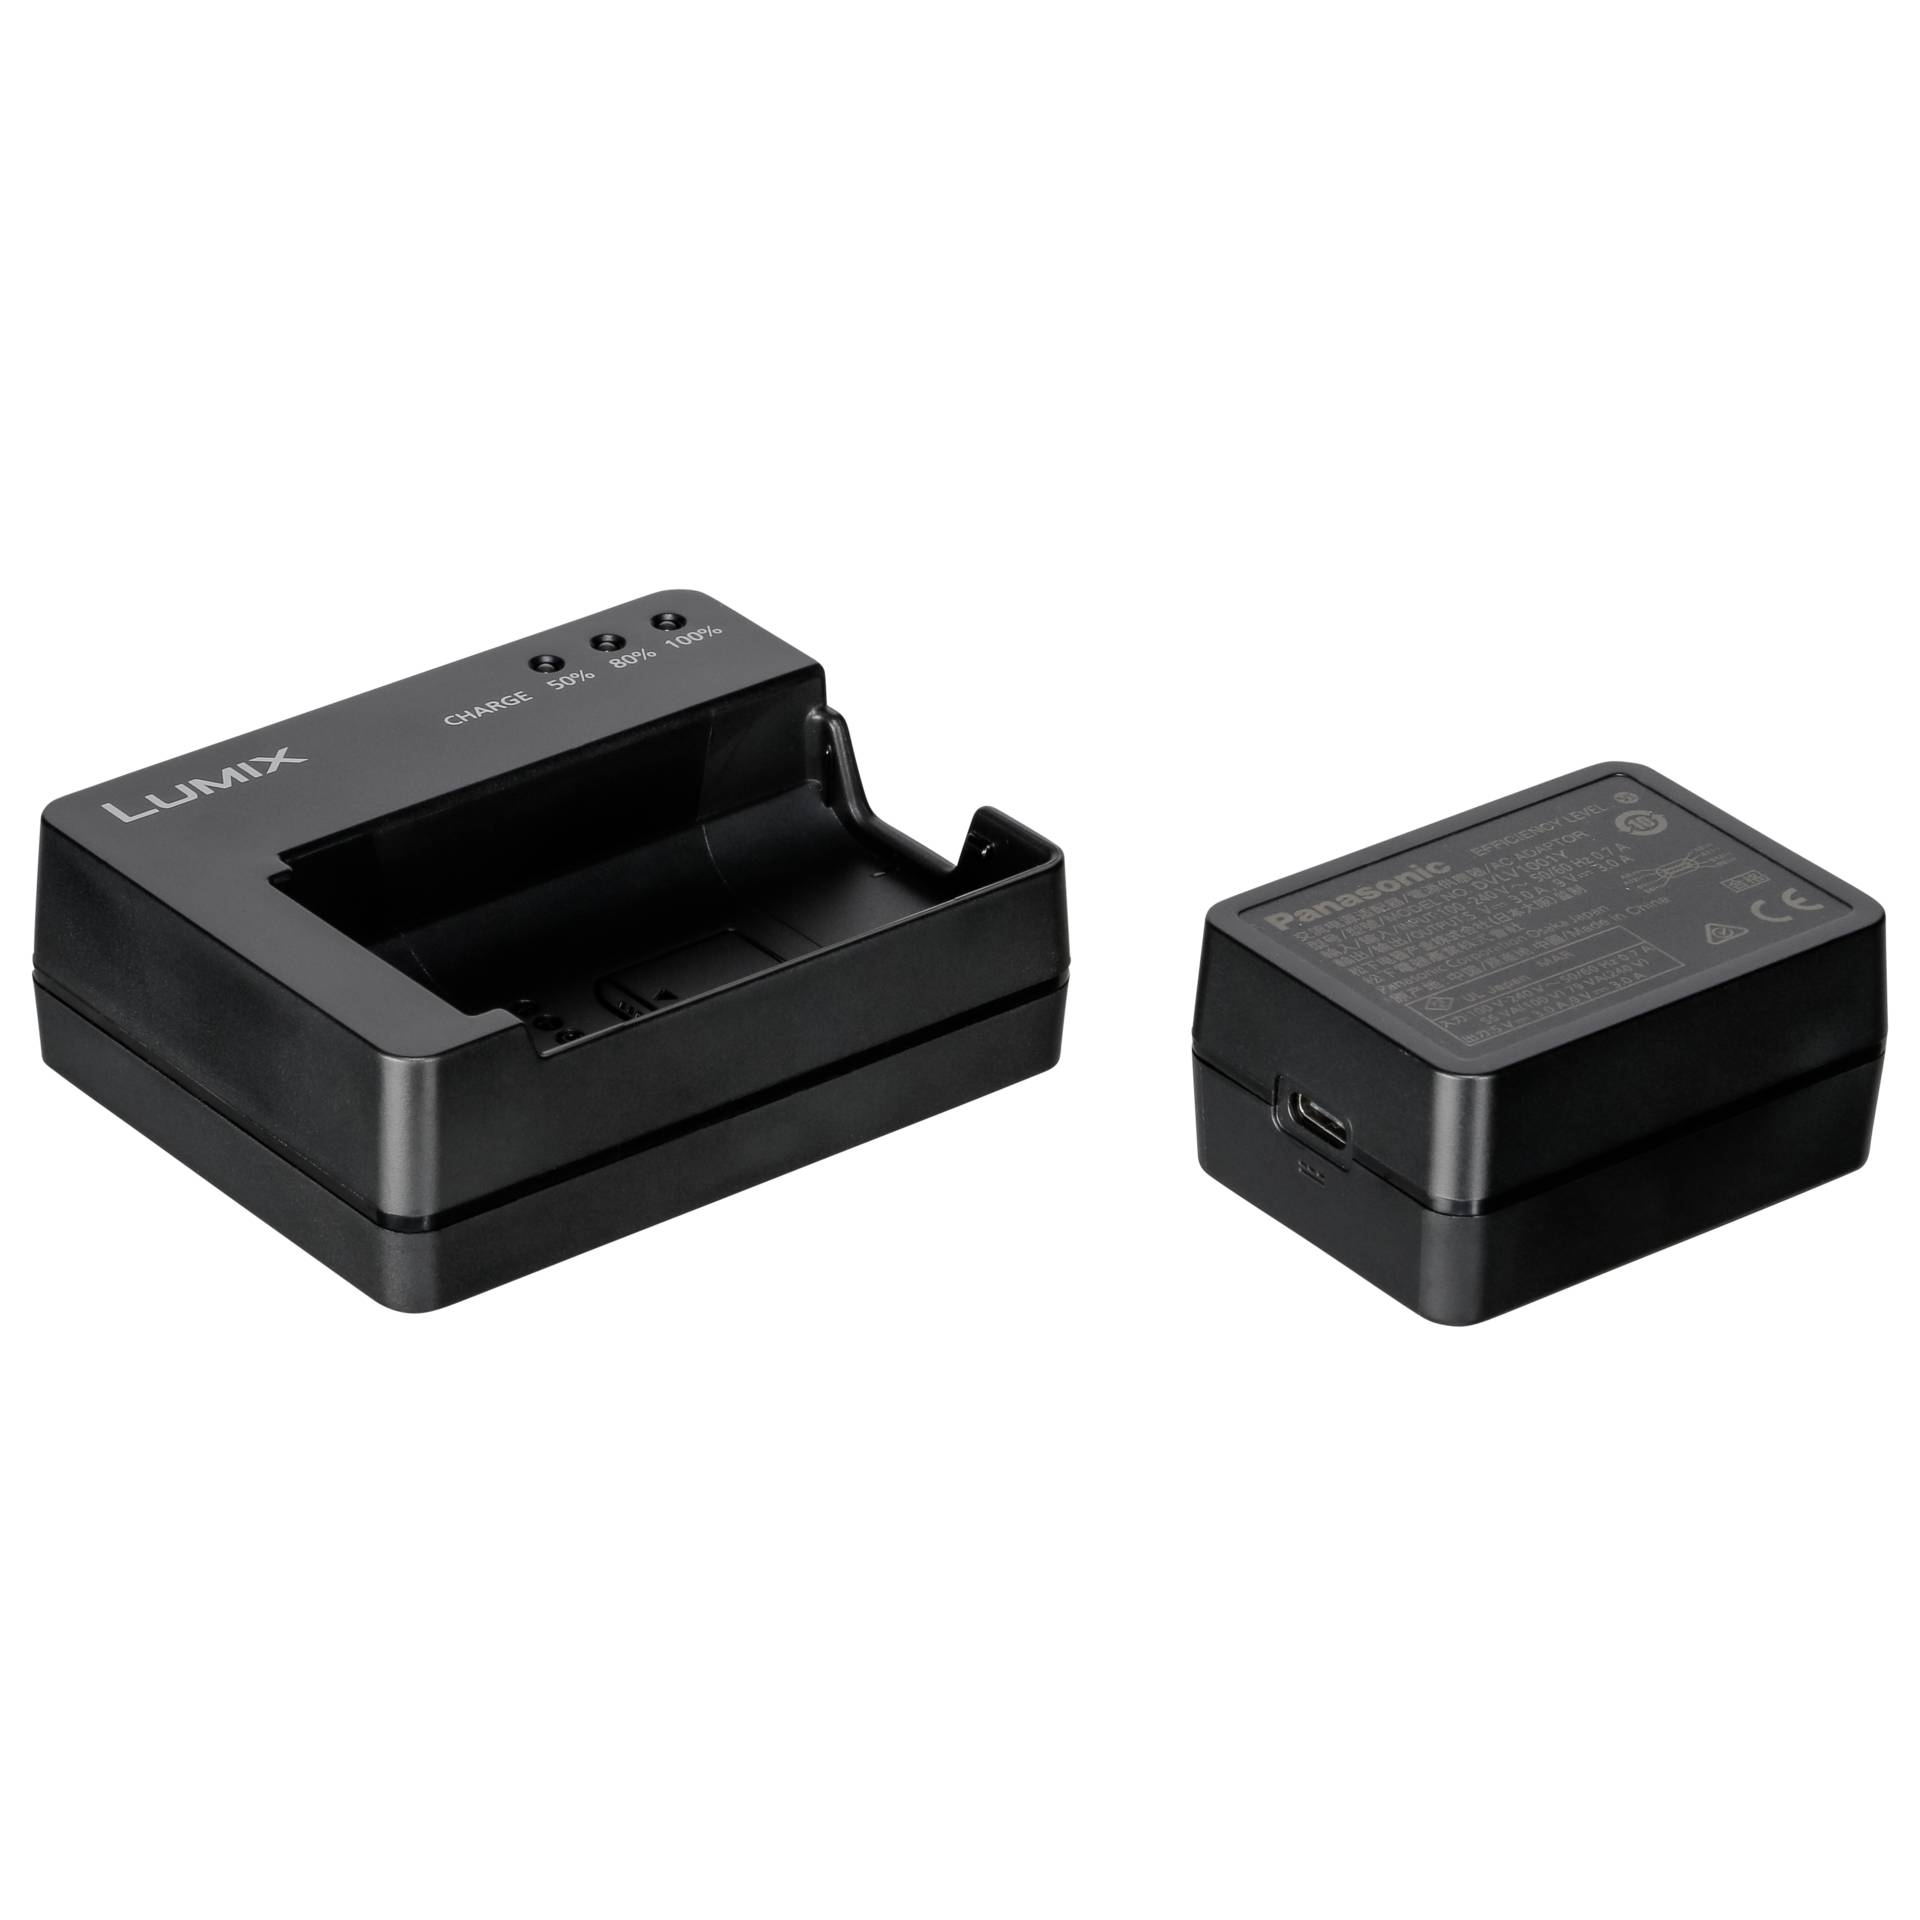 Panasonic DMW-BTC14E Akkuladegerät Batterie für Digitalkamera USB